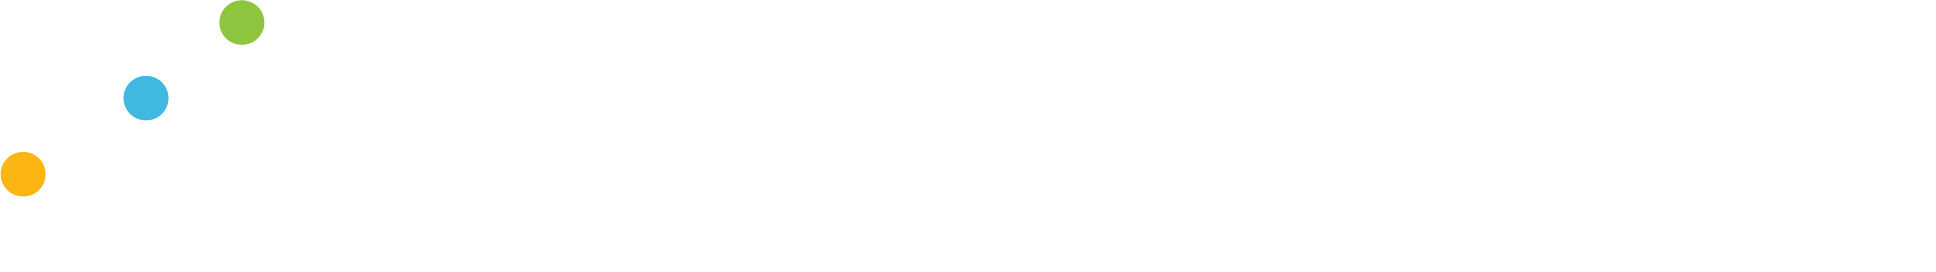 ProjectTeam.com logo (White)